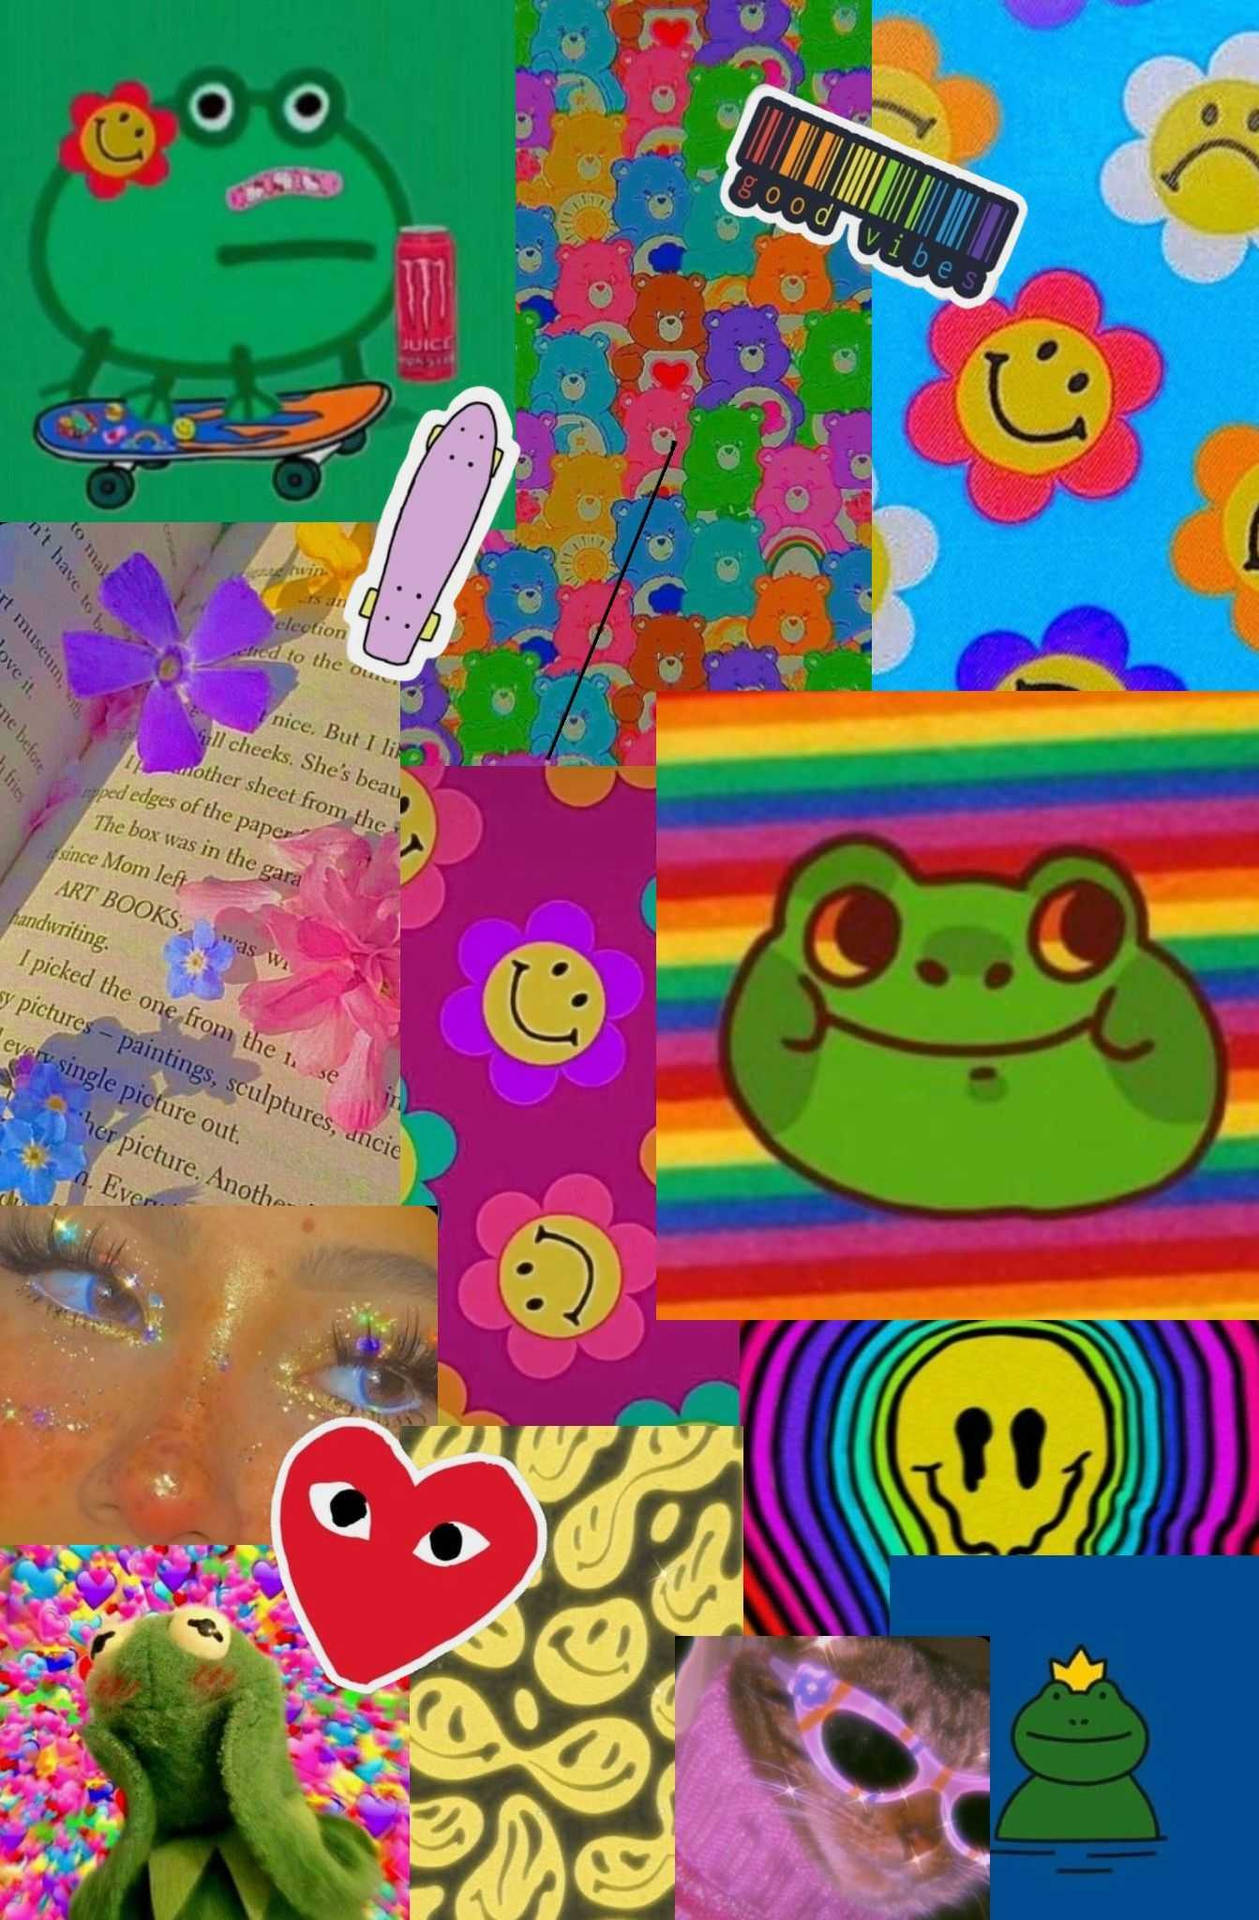 Download Indie Kid Aesthetic Collage Heart Frog Smiley Wallpaper